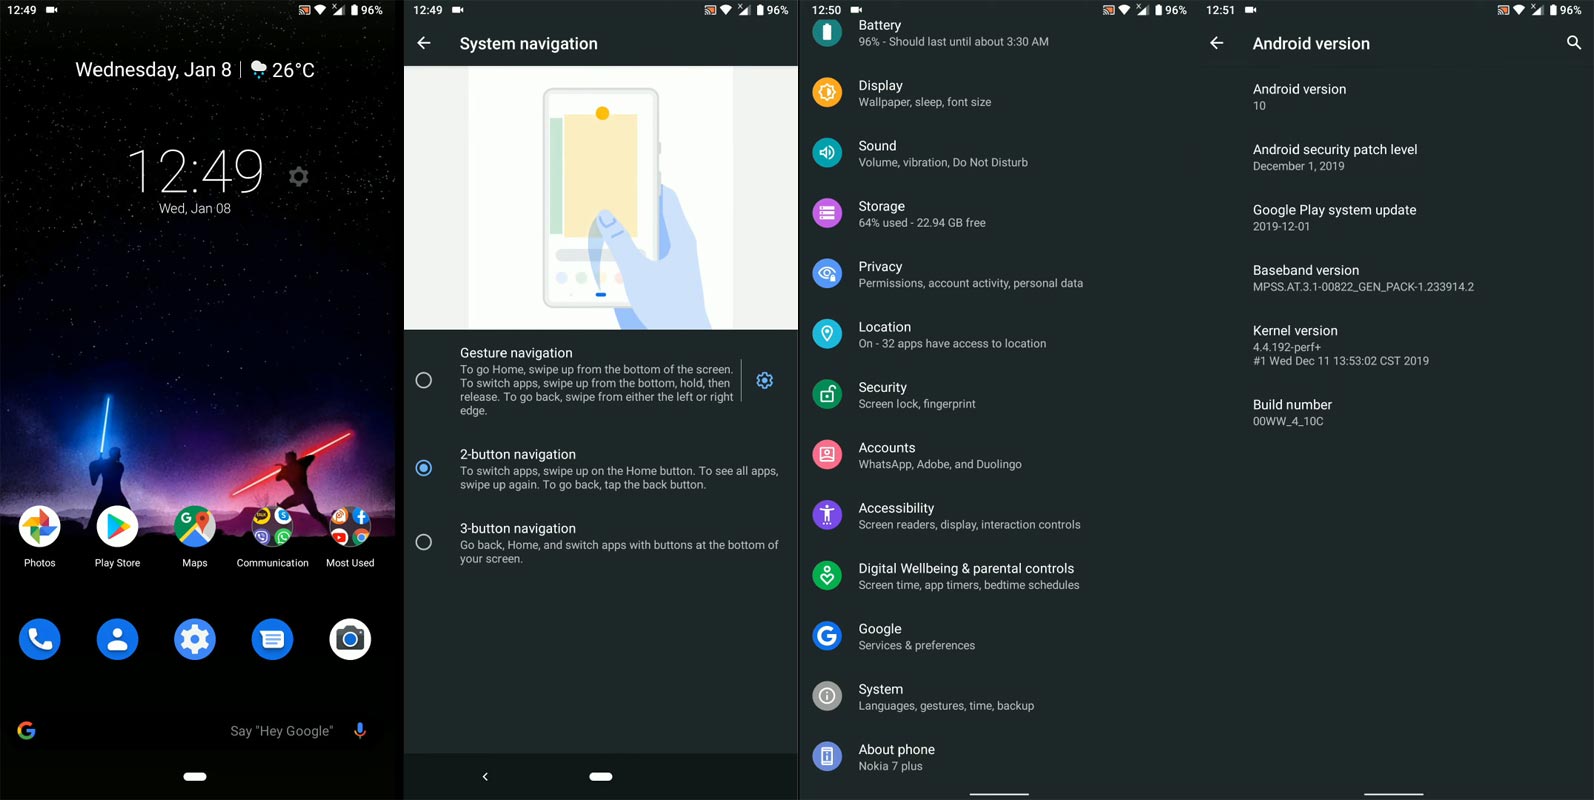 Nokia 7 Plus Android 10 Screenshots